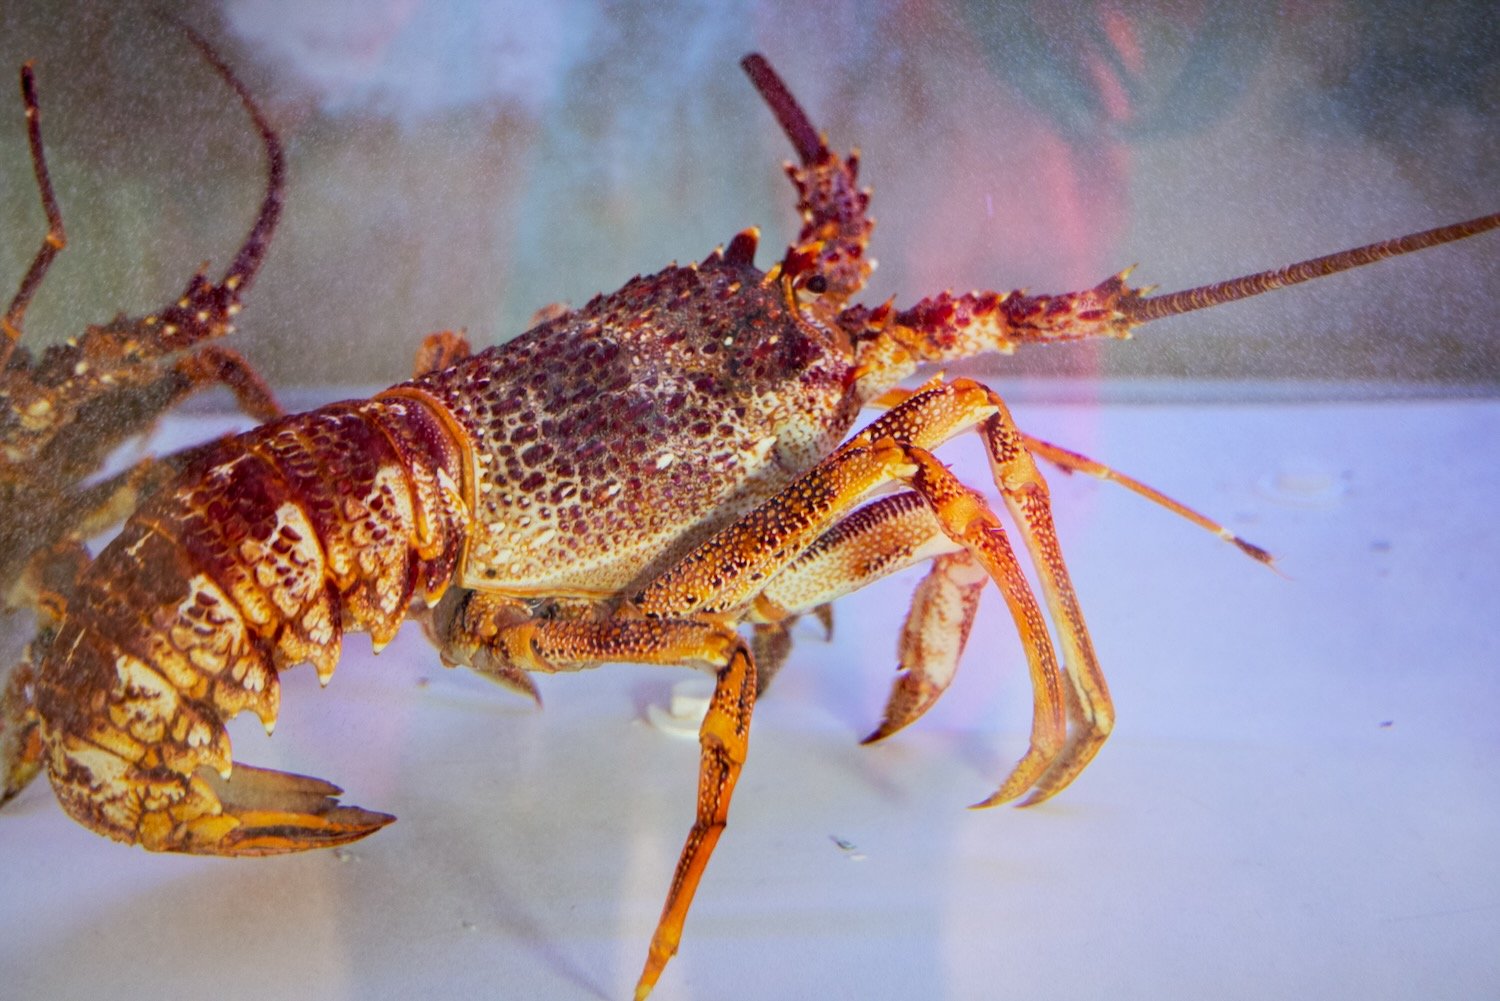 Lobster in a restaurant tank